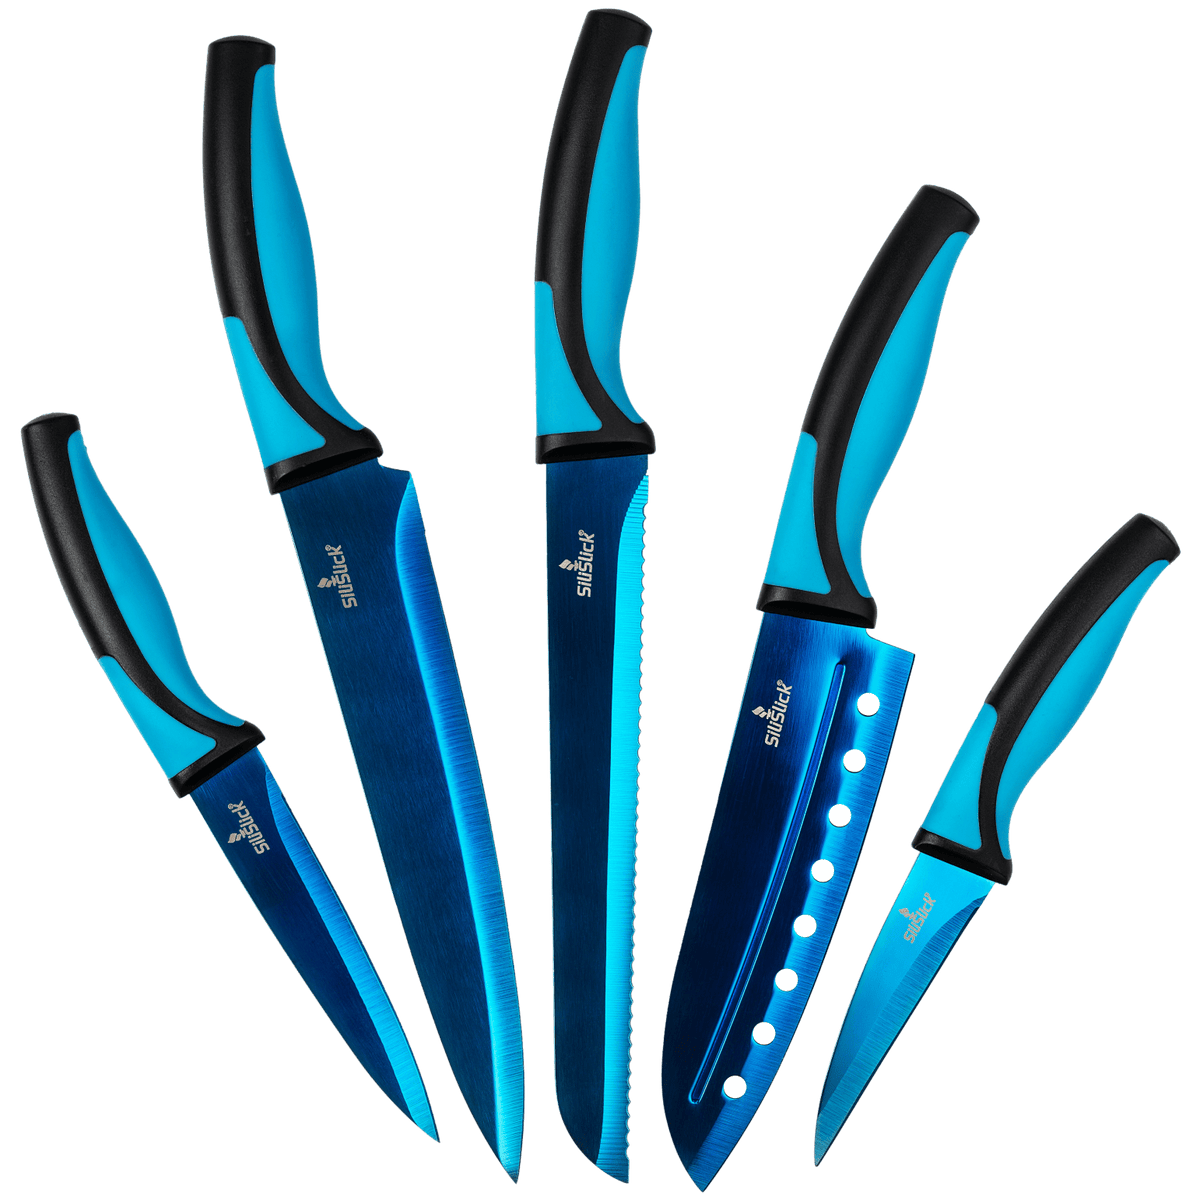 SiliSlick 4 Piece Blue Steak Knife Set - Stainless Steel Blades – SiliSlick®